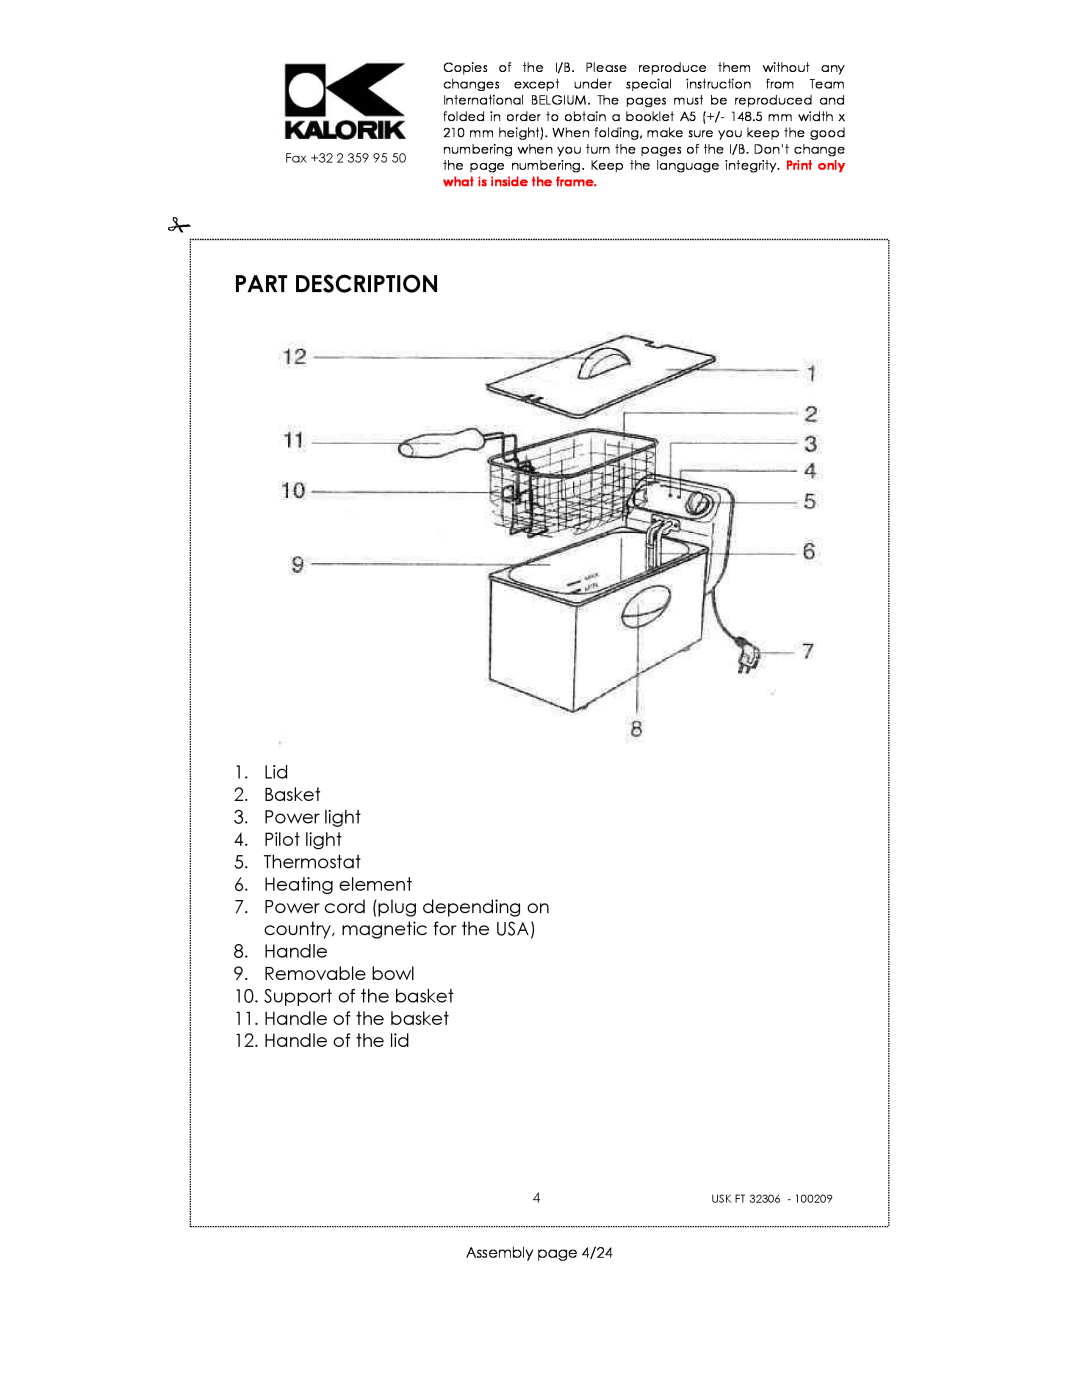 Kalorik USK FT 32306 manual Part Description, Lid 2.Basket 3.Power light 4.Pilot light, Thermostat 6.Heating element 